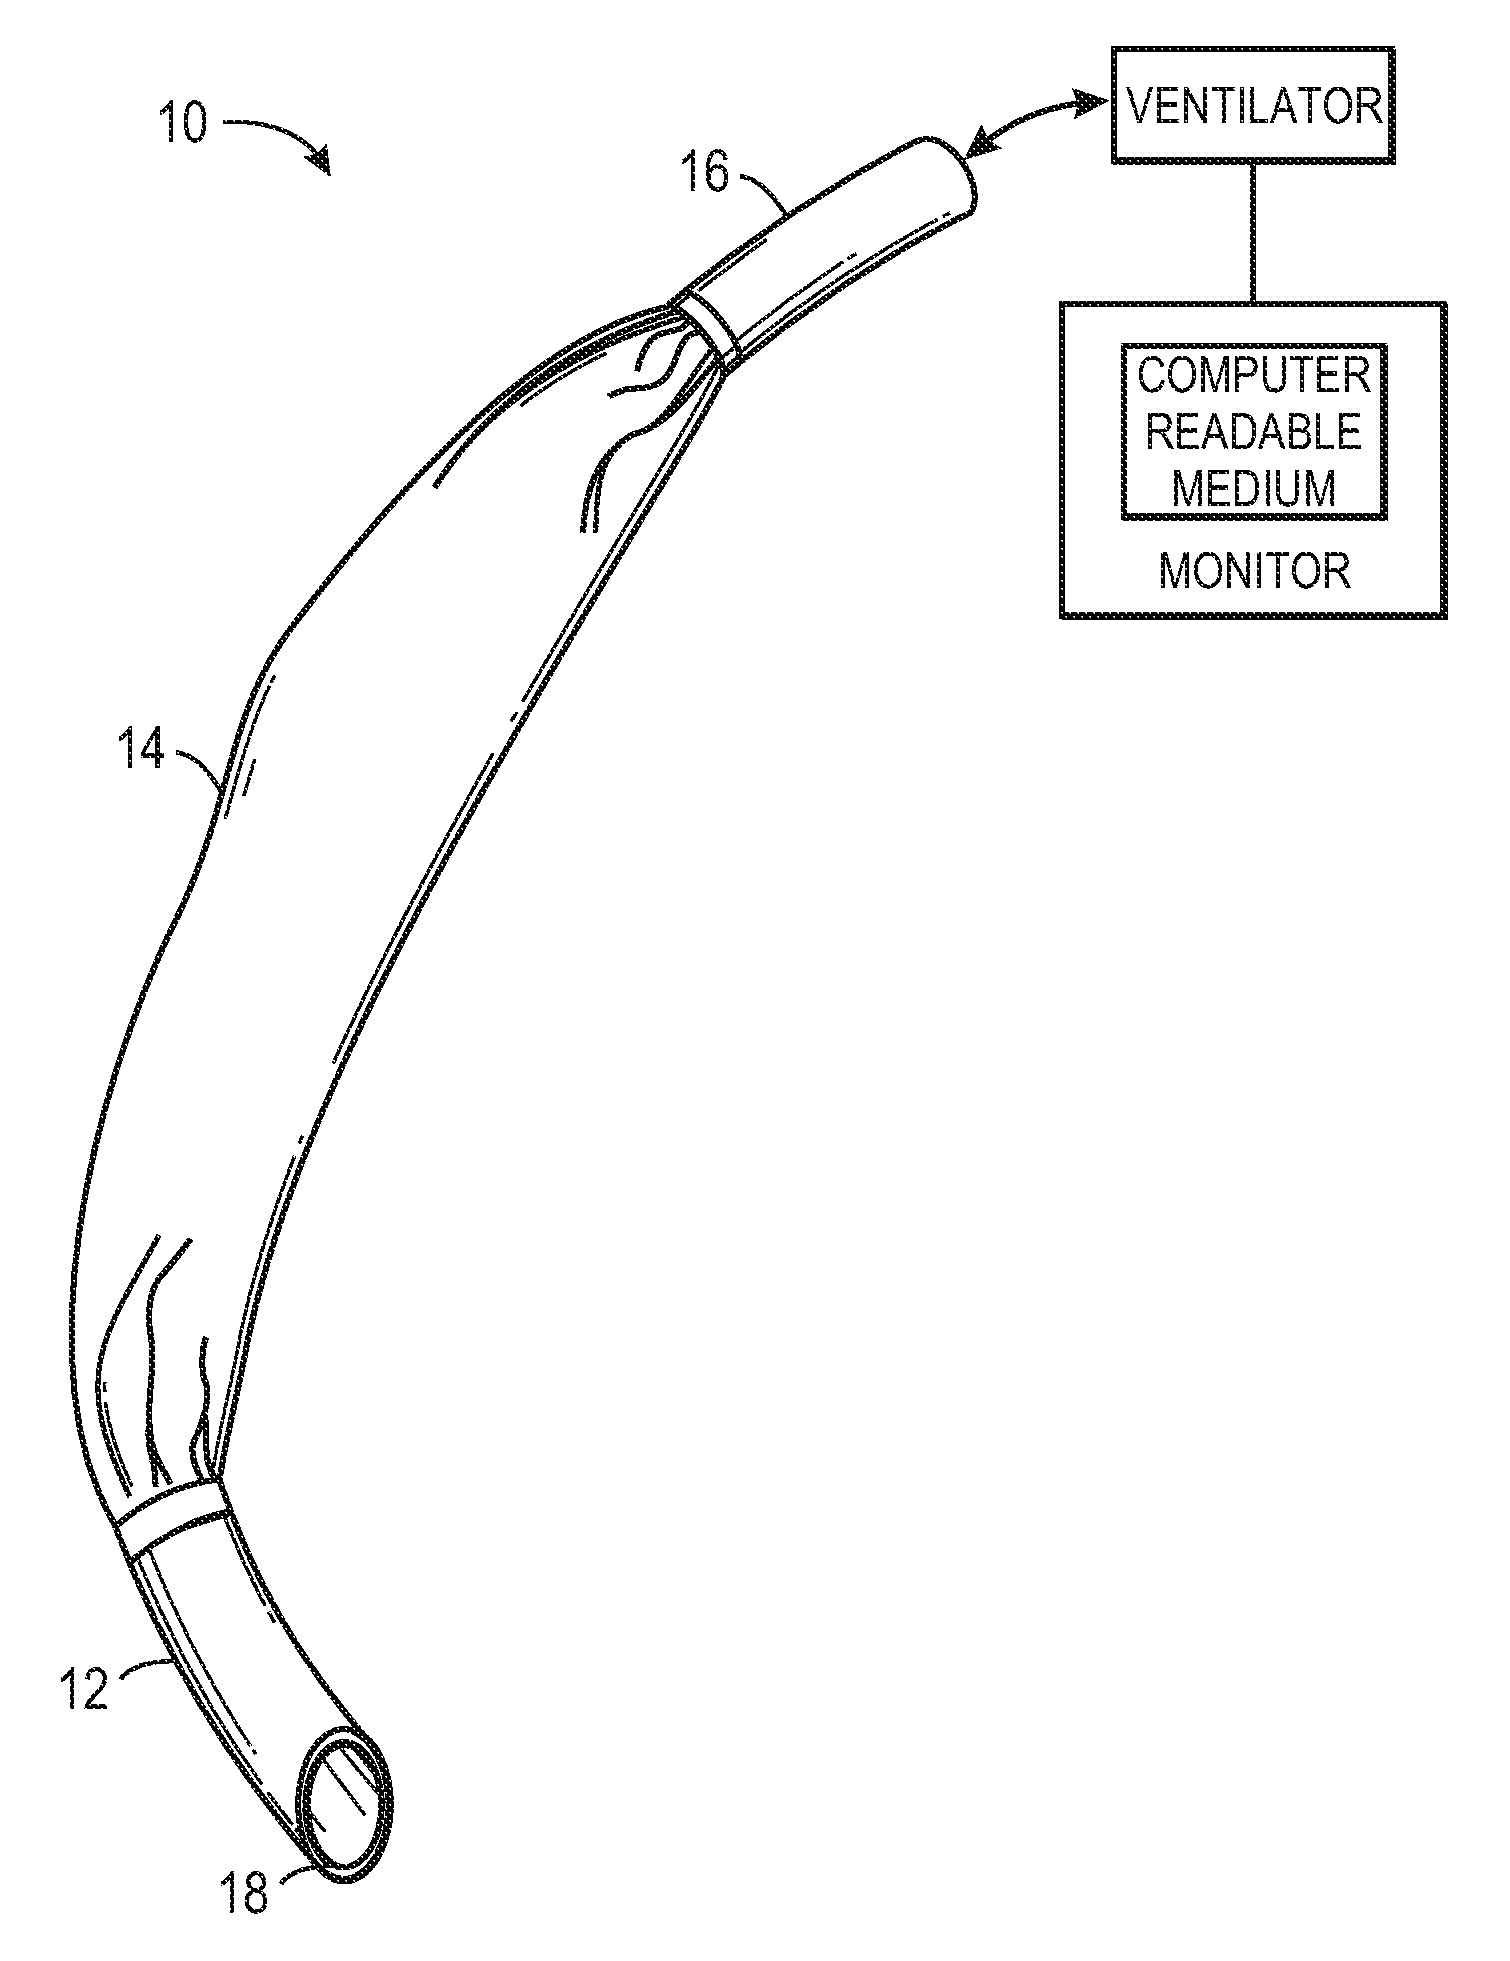 Self-sizing adjustable endotracheal tube